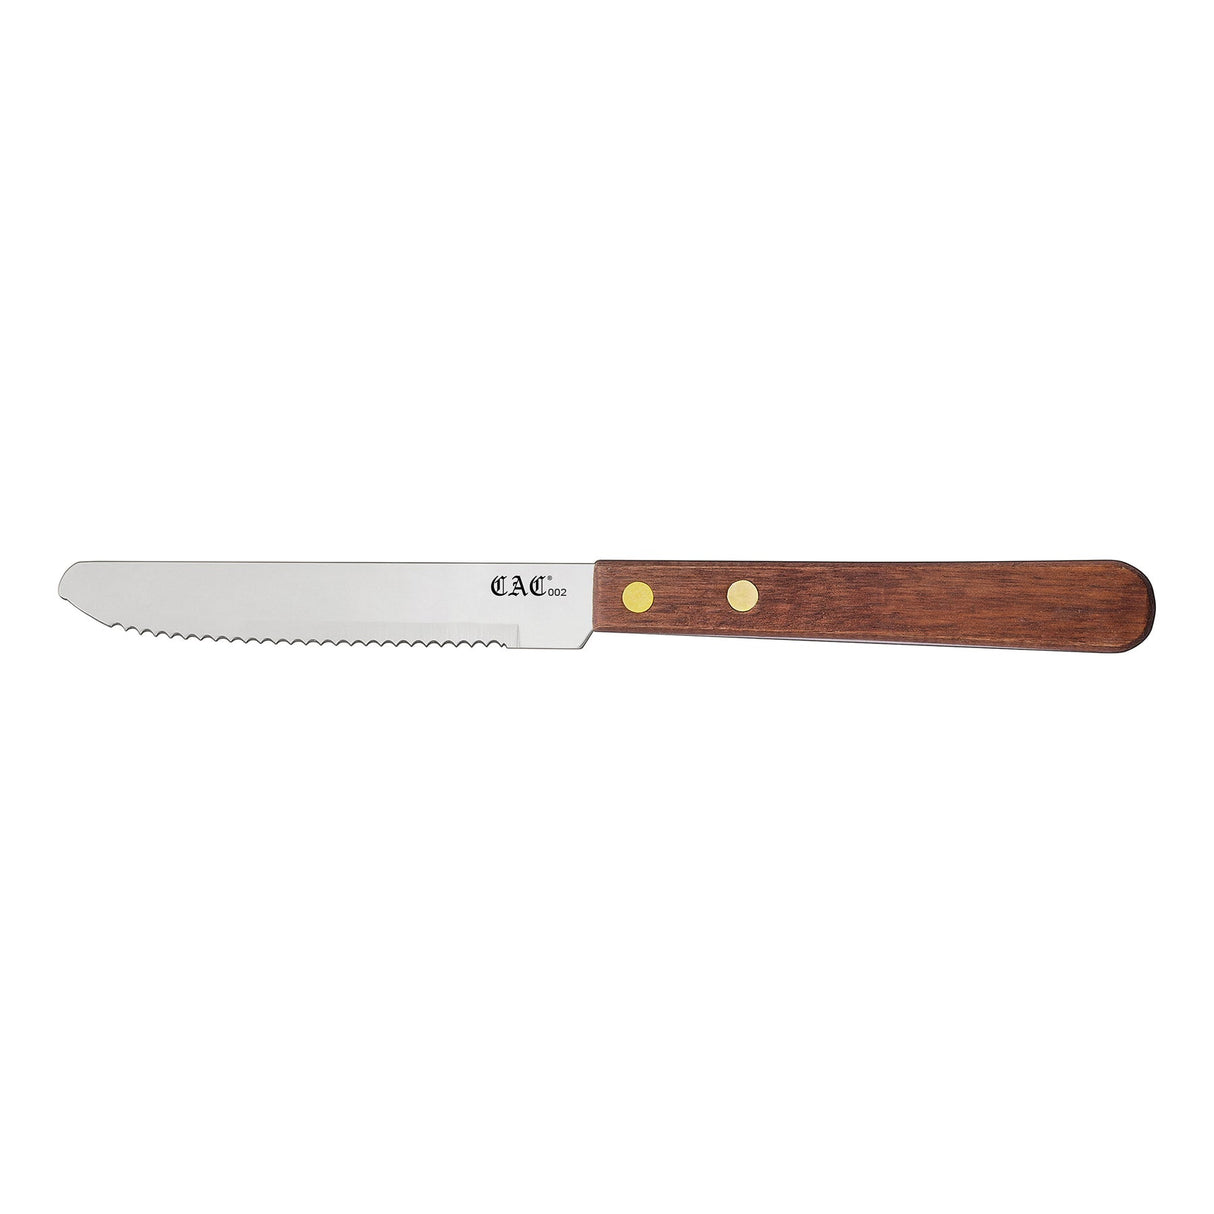 Knife Steak Round Tip Wood Hdl 4-1/4"